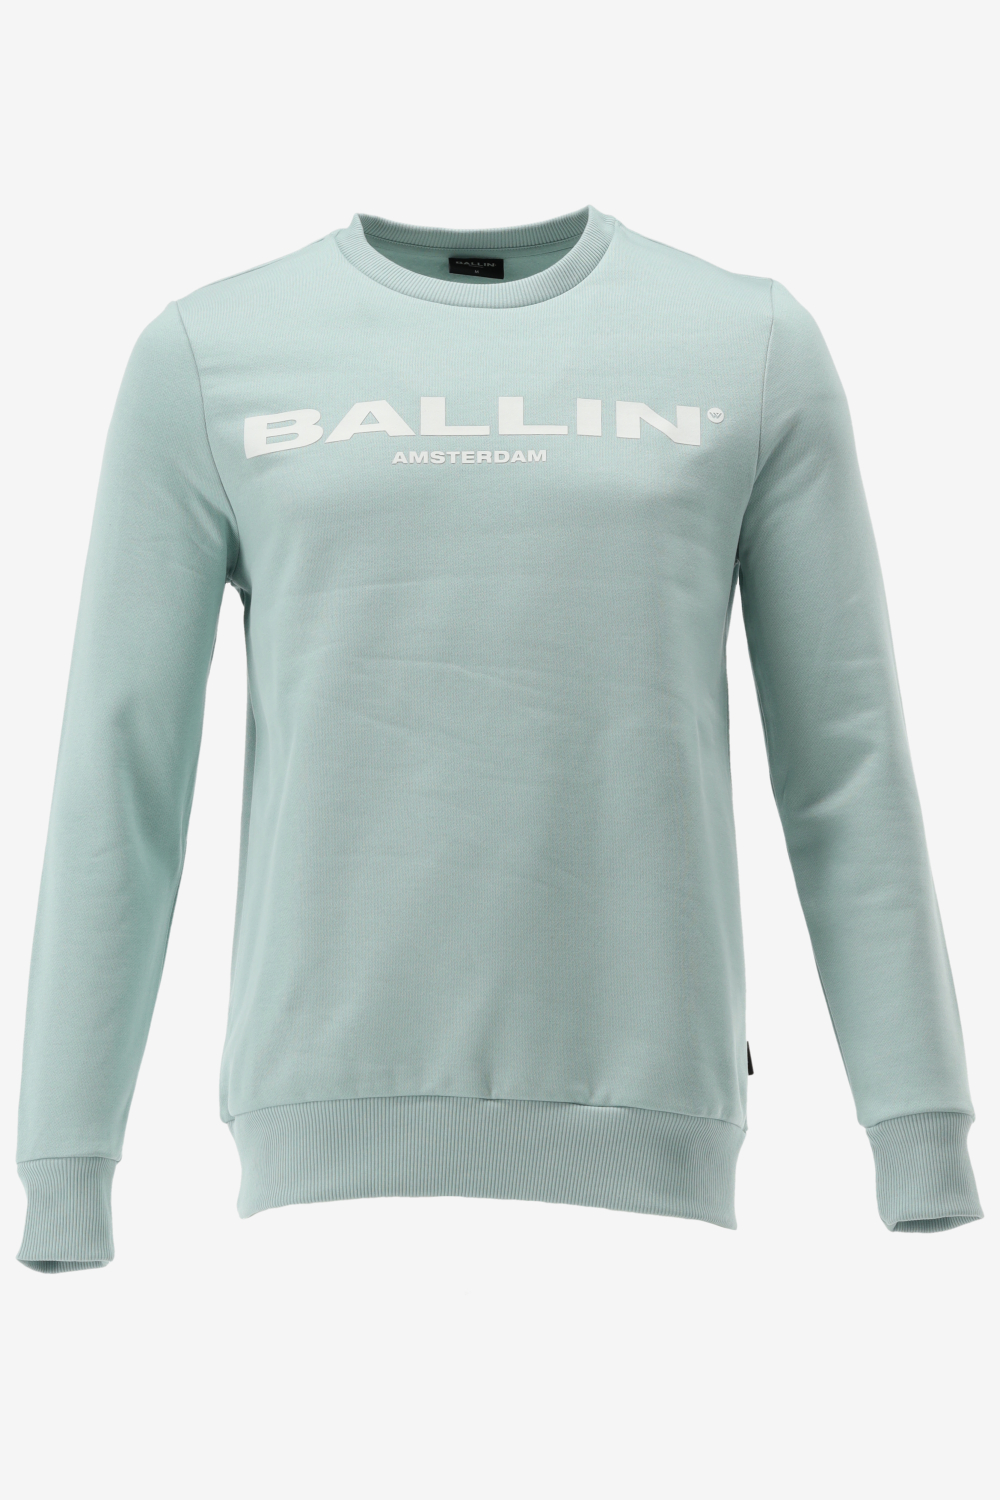 Ballin Amsterdam -  Heren Slim Fit  Original Sweater  - Groen - Maat L